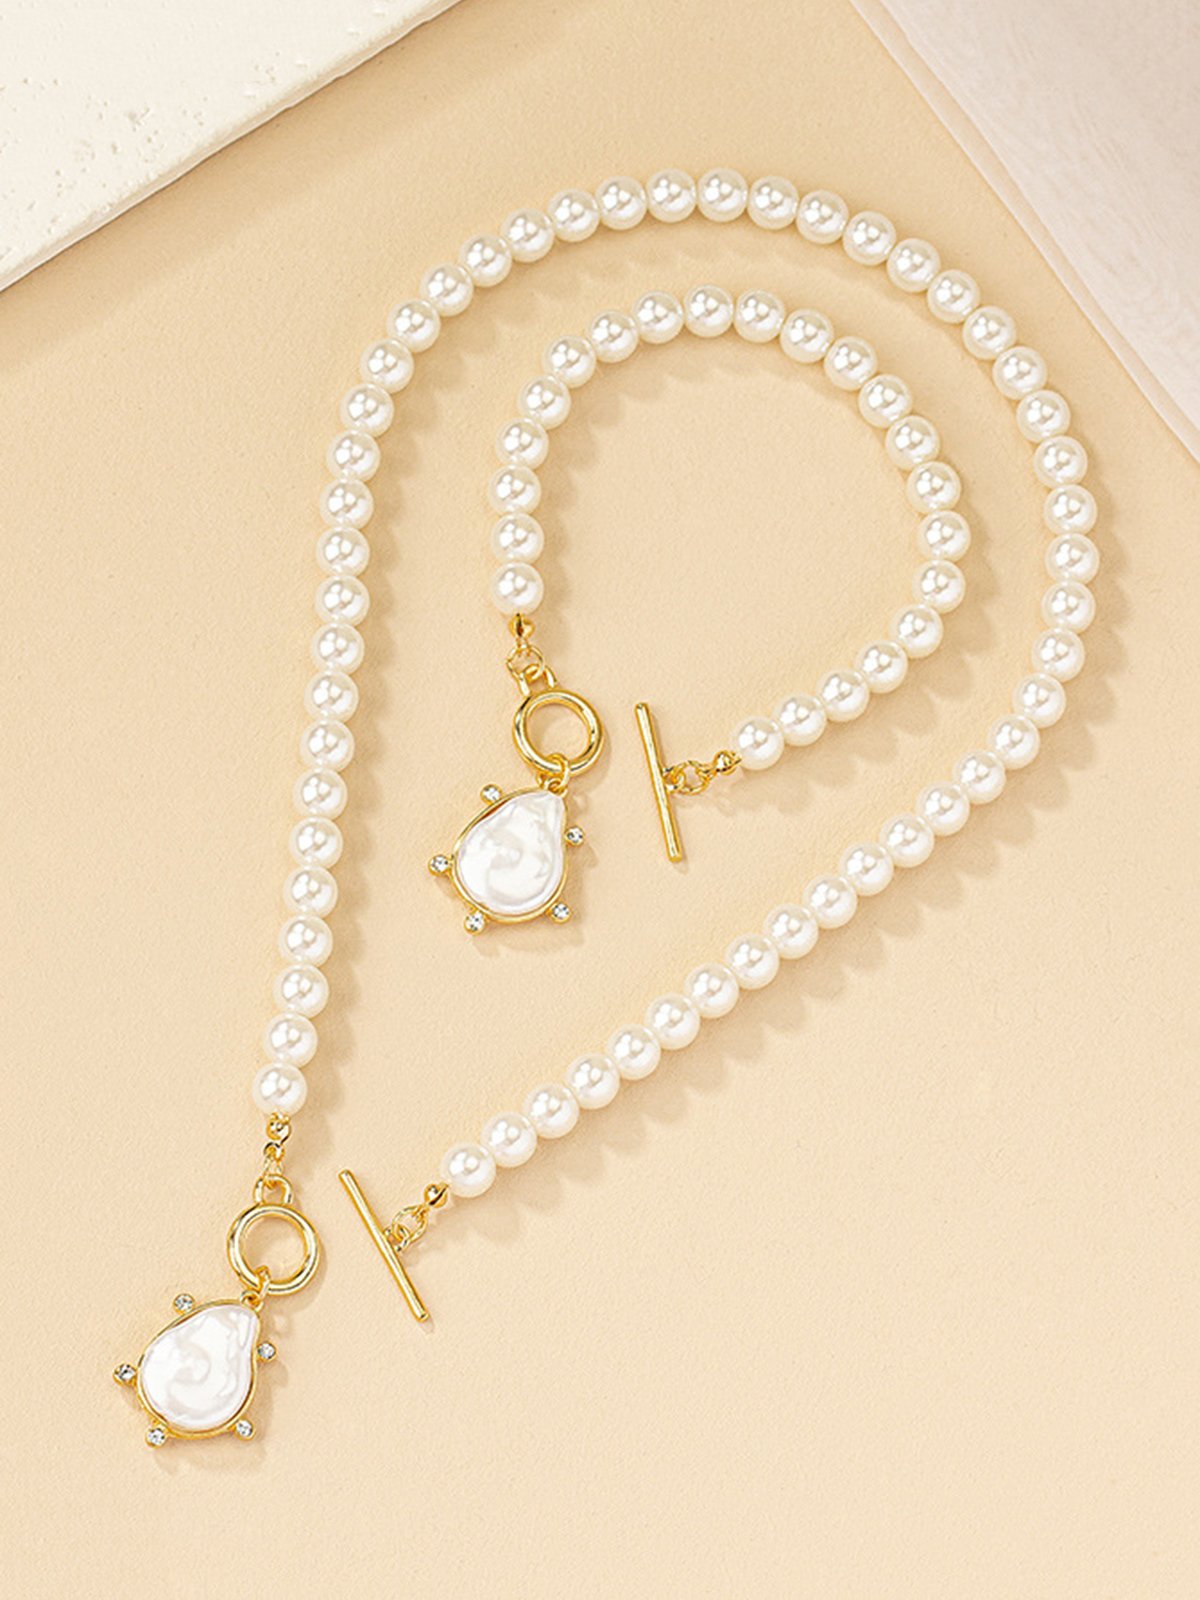 2pcs/set Rhinestone Pendant Necklace Imitation Pearl Bracelet